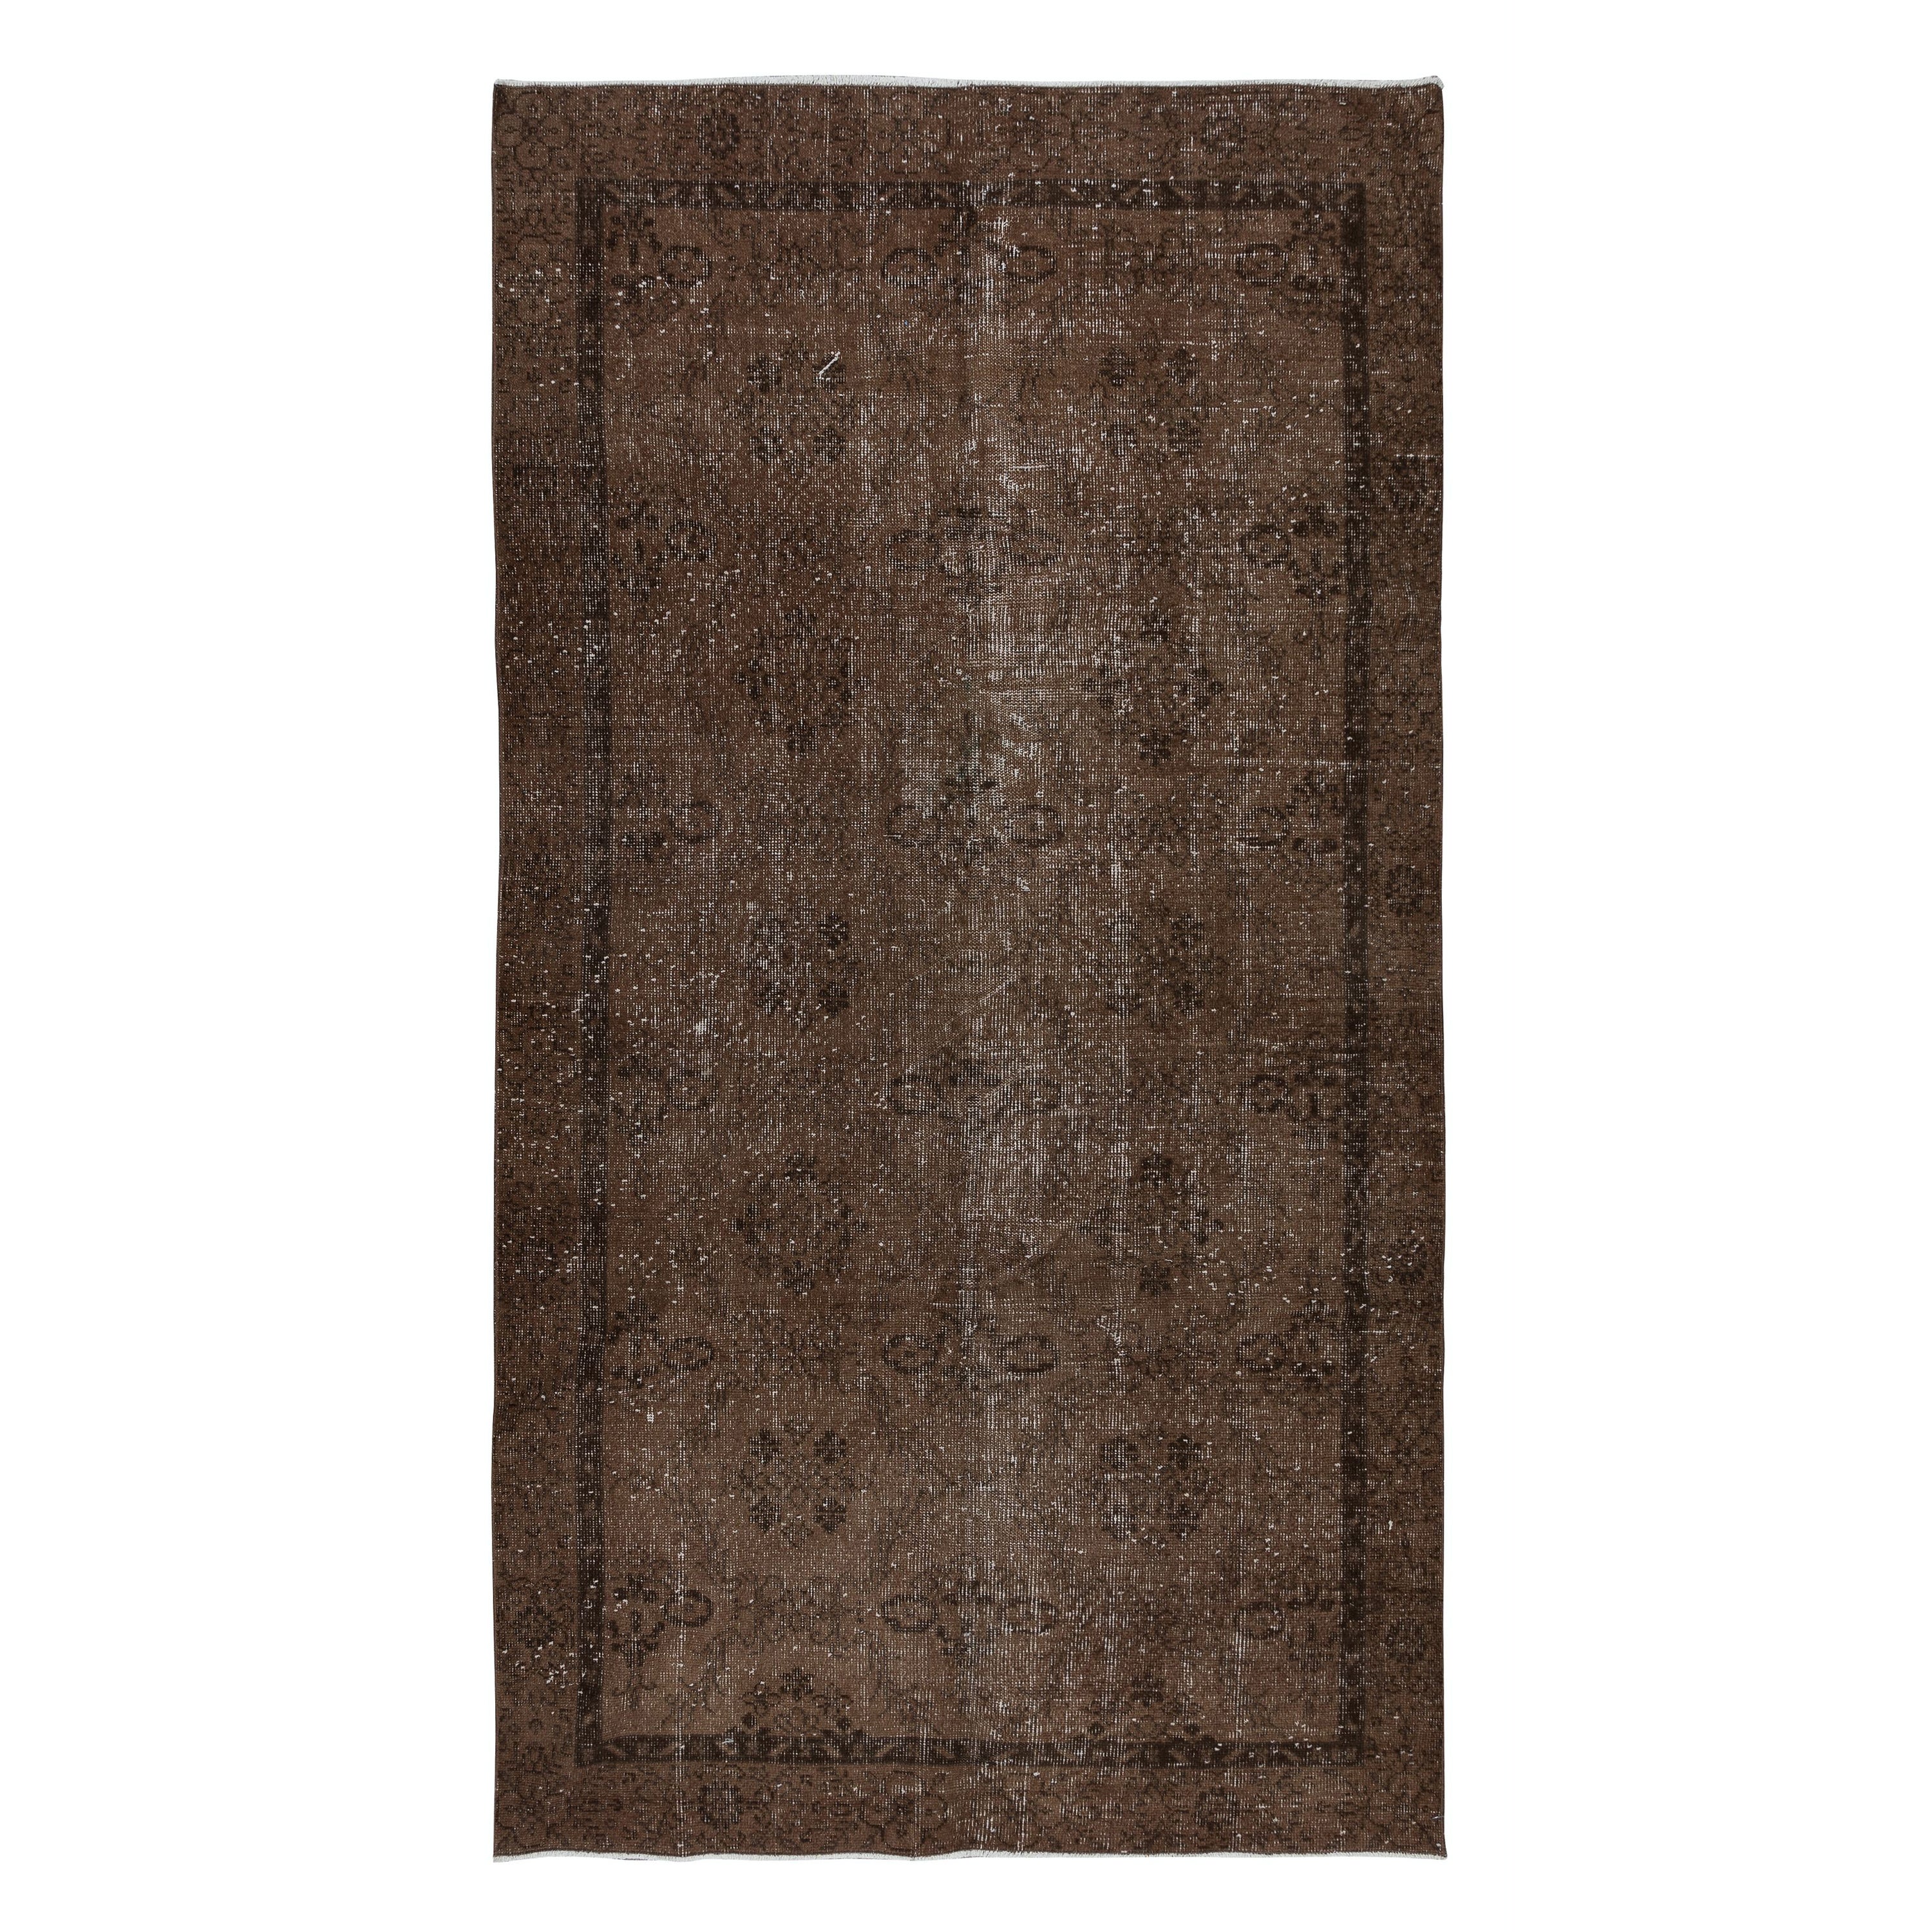 4.8x9.2 Ft Brown Handmade Wool & Cotton Rug, Contemporary Turkish Carpet